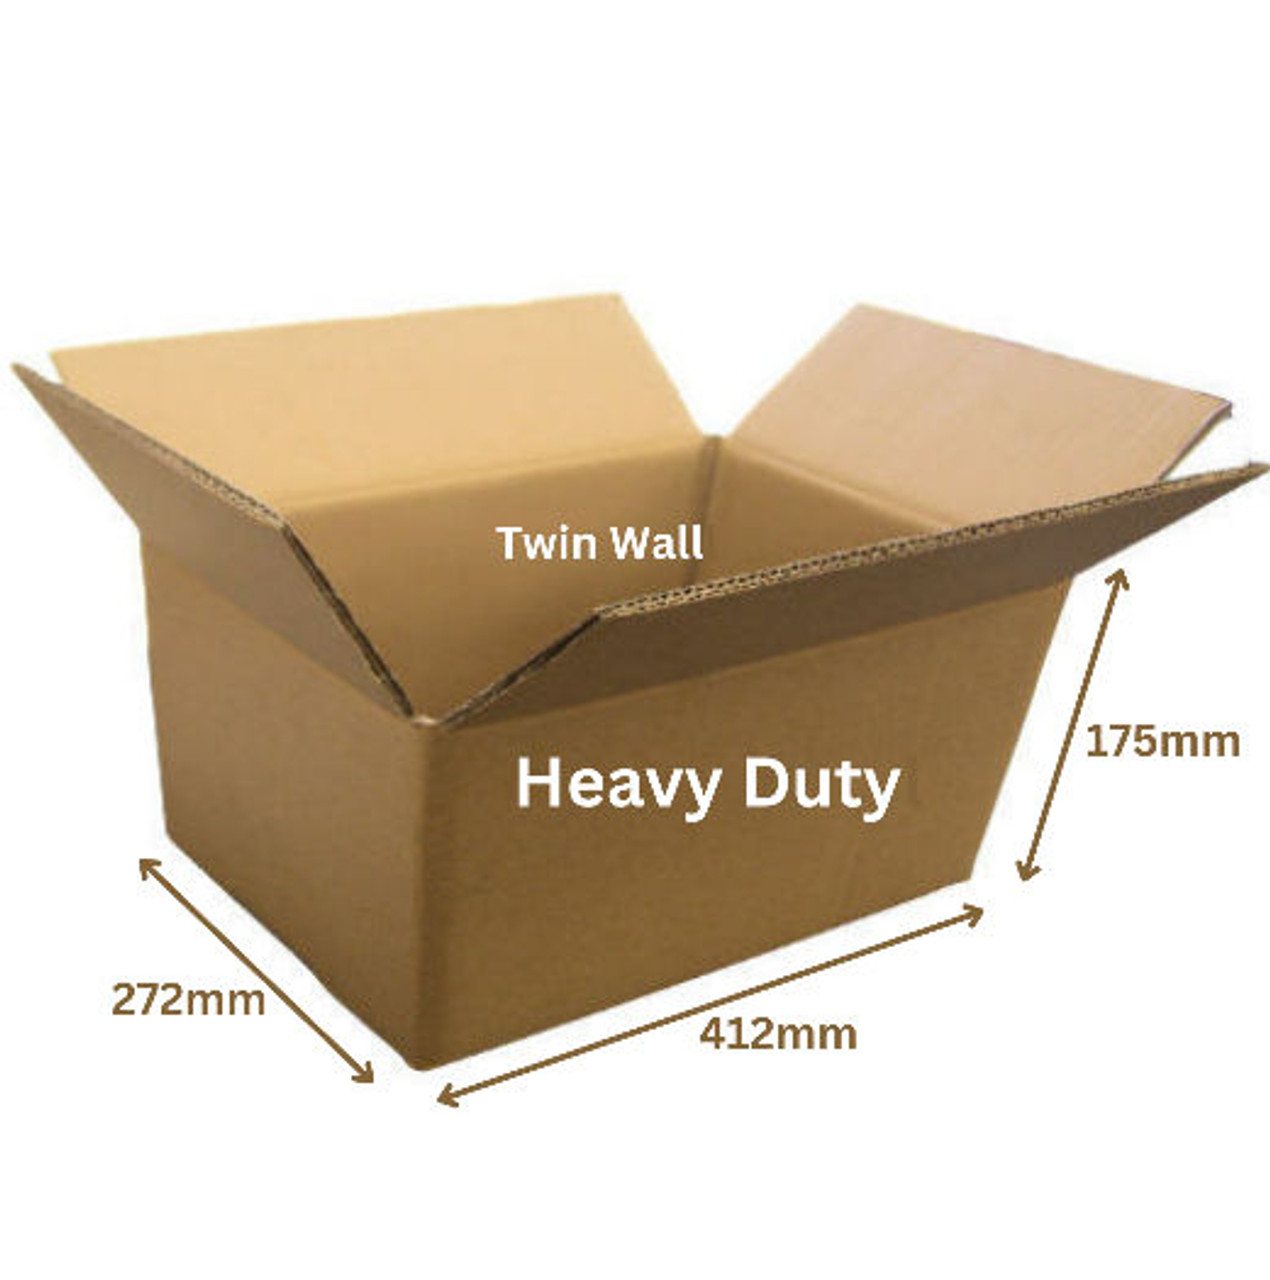 Pack 10 - Heavy Duty Twin Wall Cardboard Boxes 412 x 272 x 175m